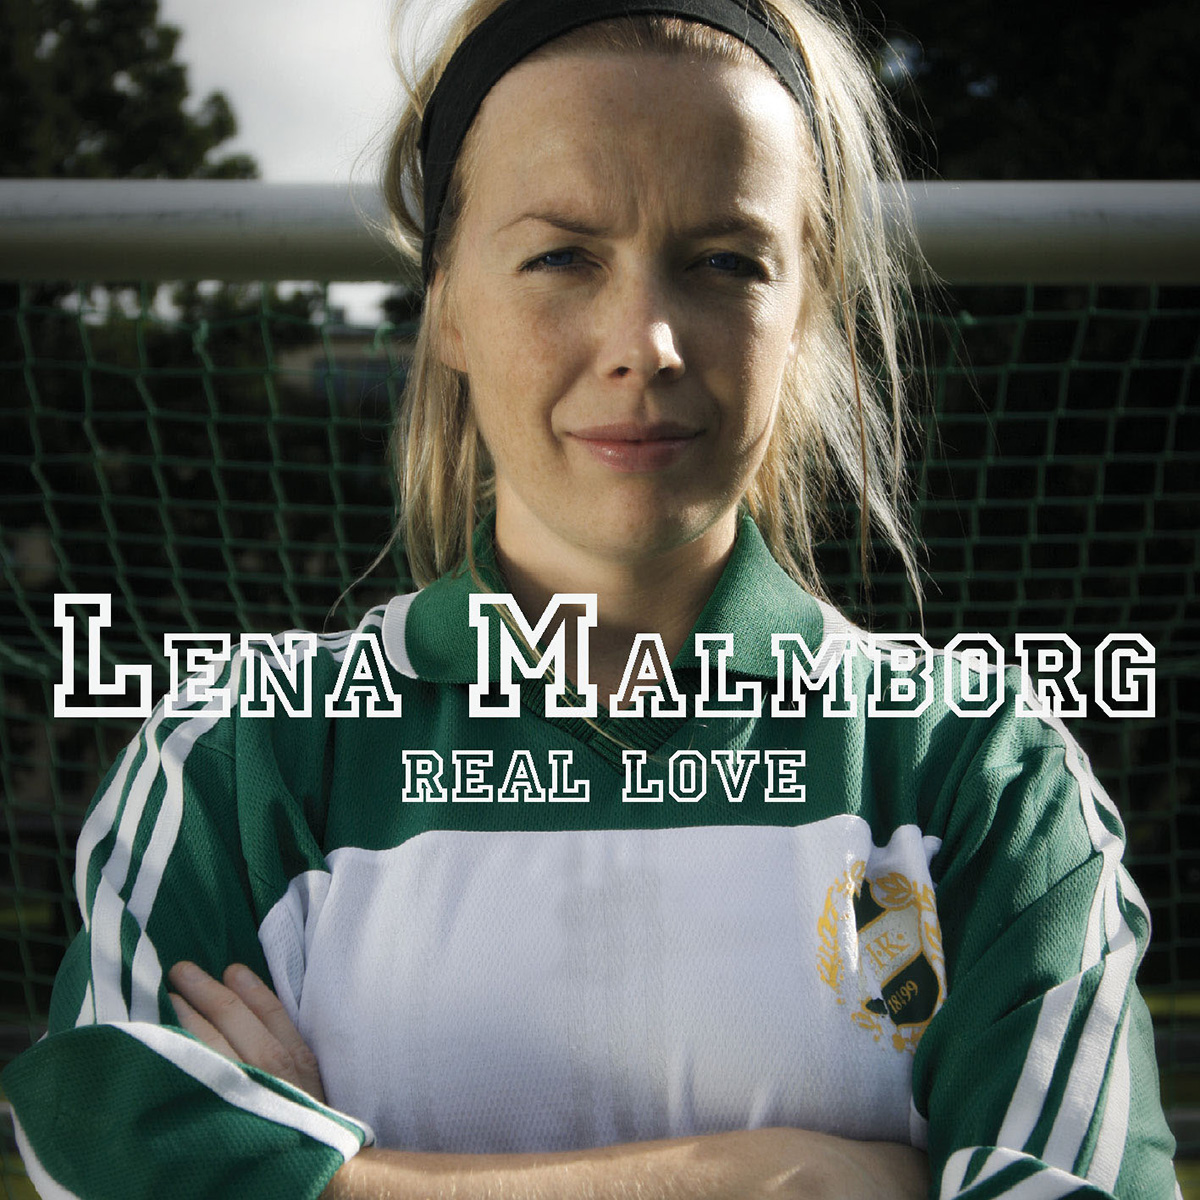 Lena Malmborg - Real Love